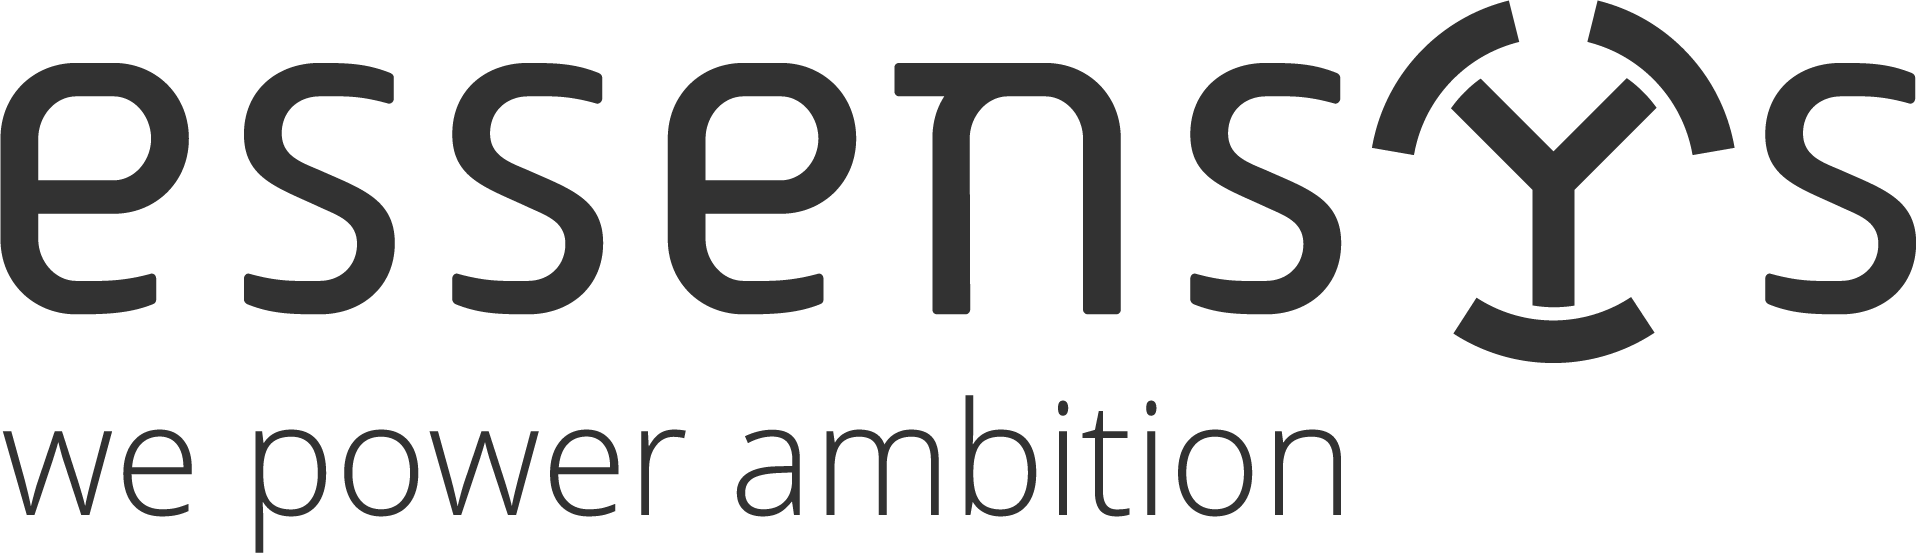 essensys logo full dark grey4